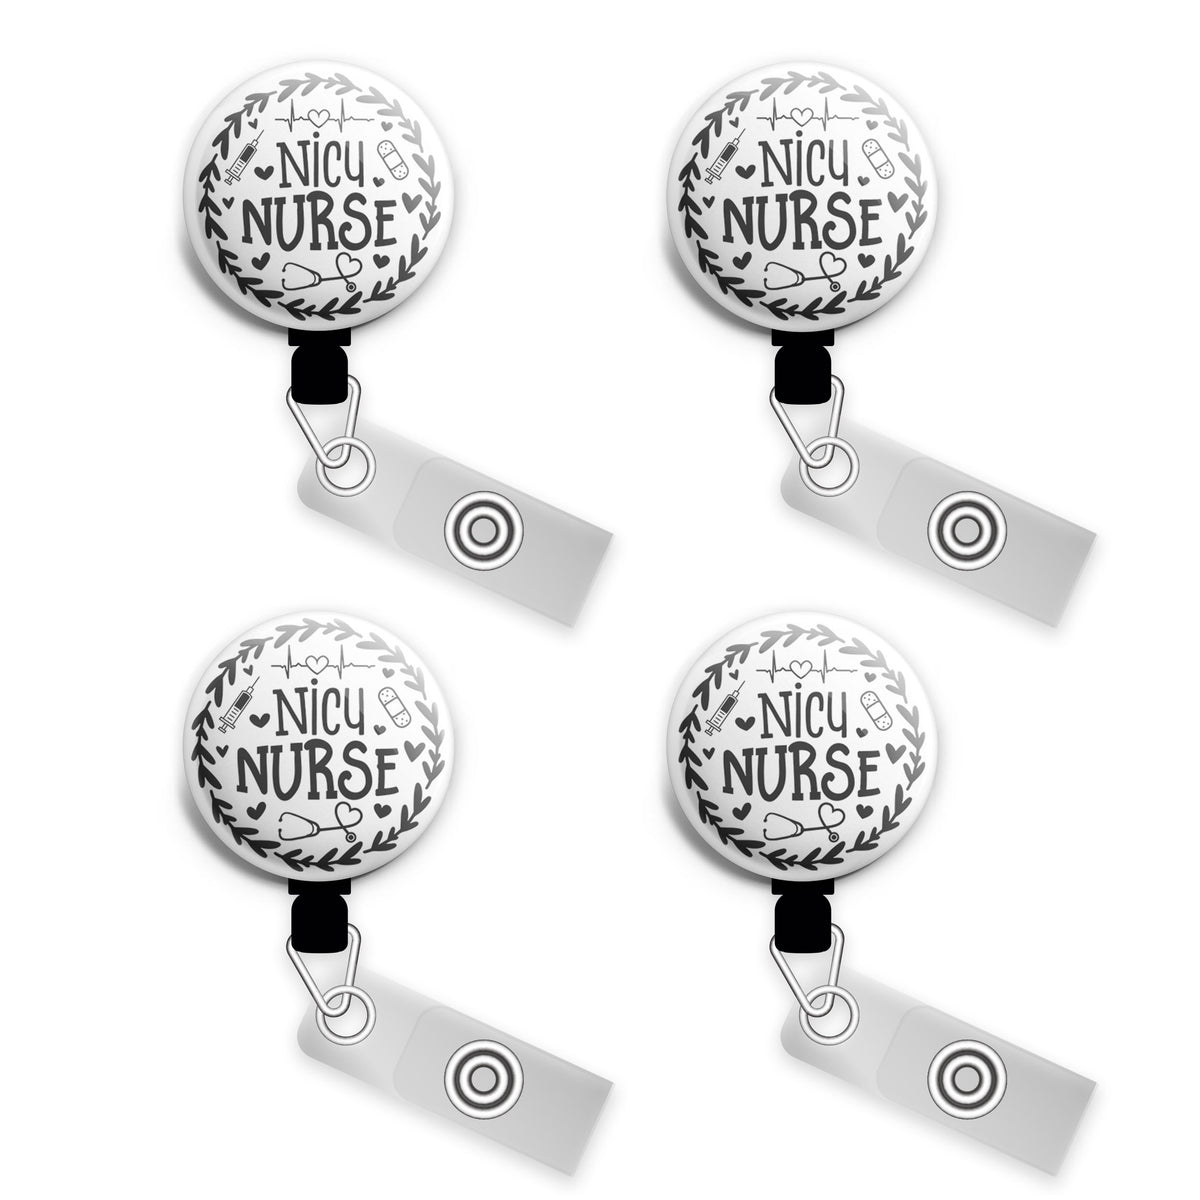 Nicu Nurse Hearts Badge Reel • Nicu, Labor and Delivery Badge Holder • Swapfinity Gator 4pk |Save 10% / Black